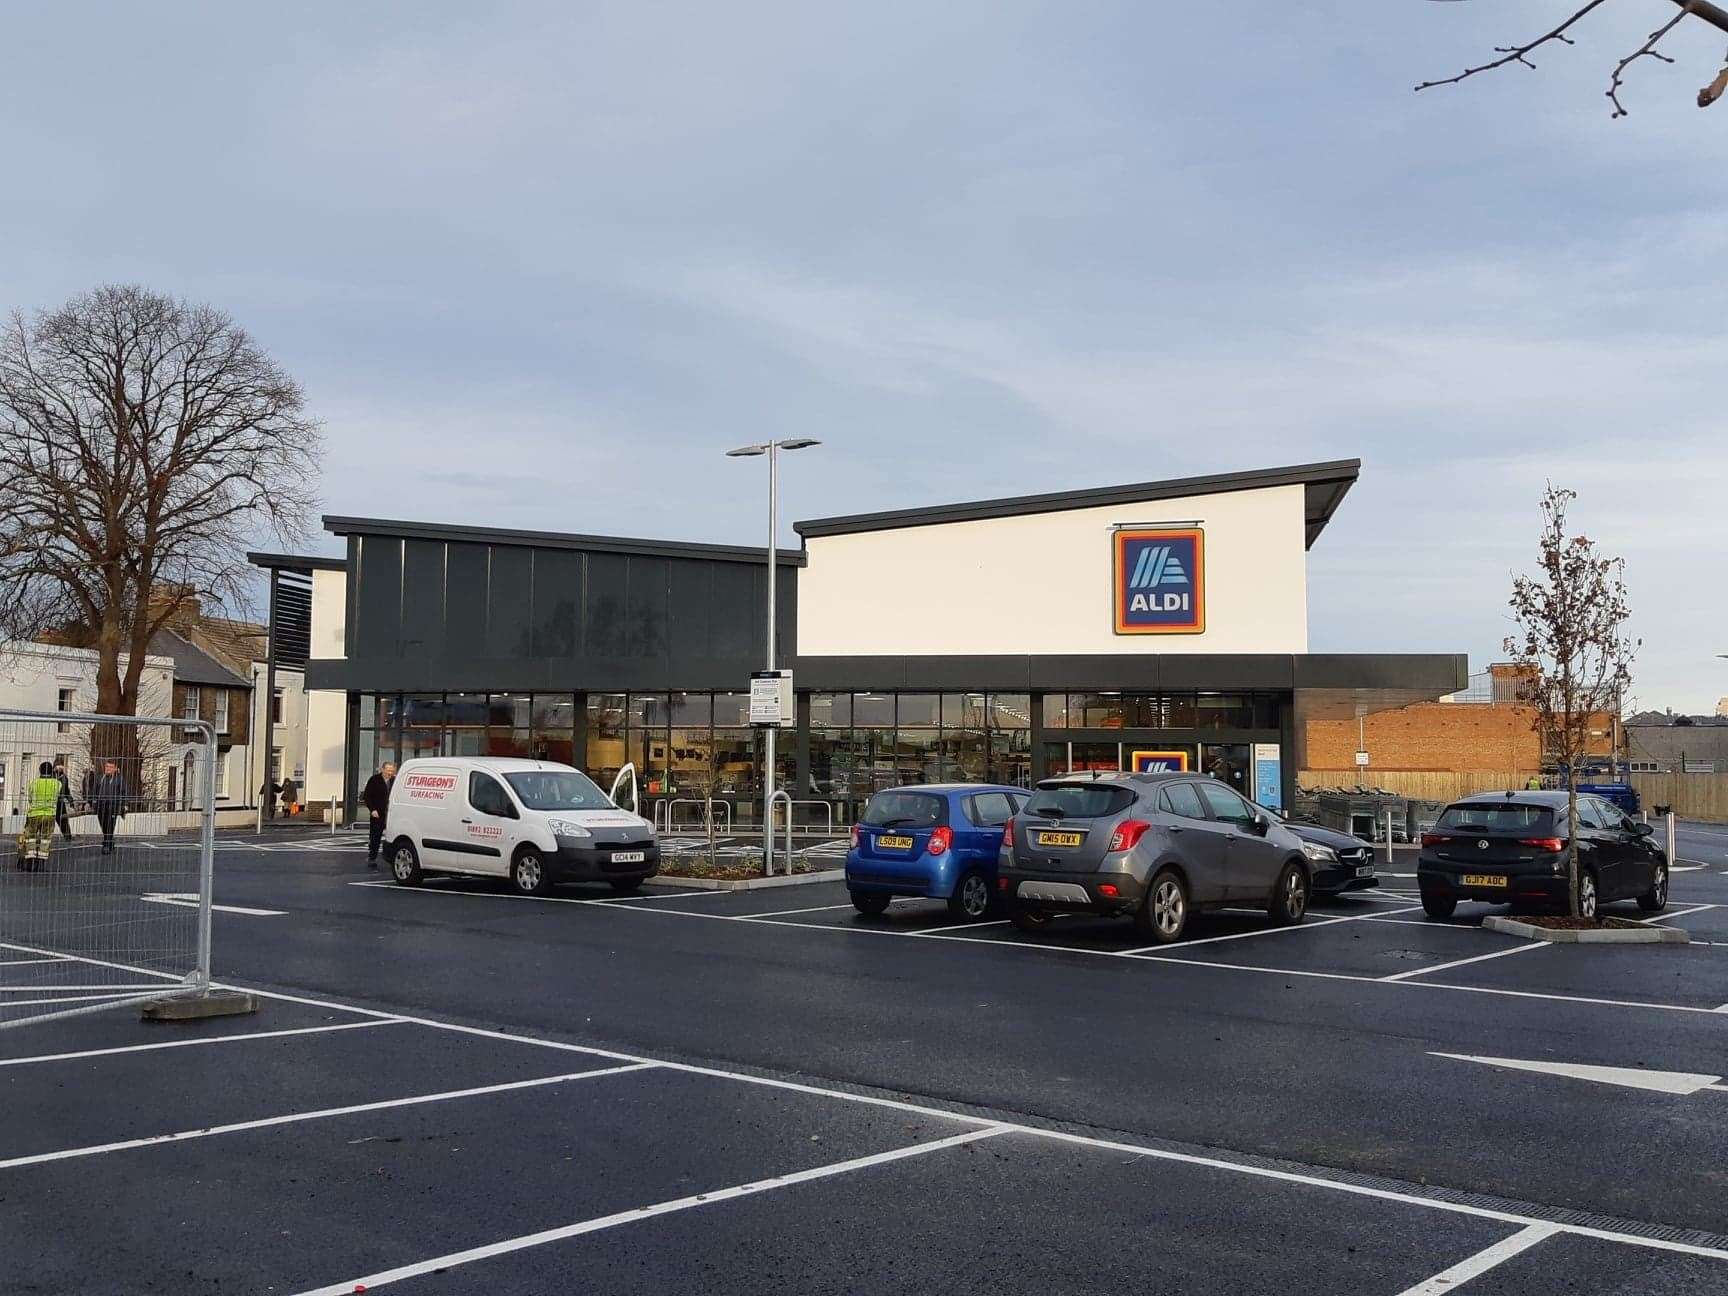 The Aldi supermarket in Deal opened in November 2019